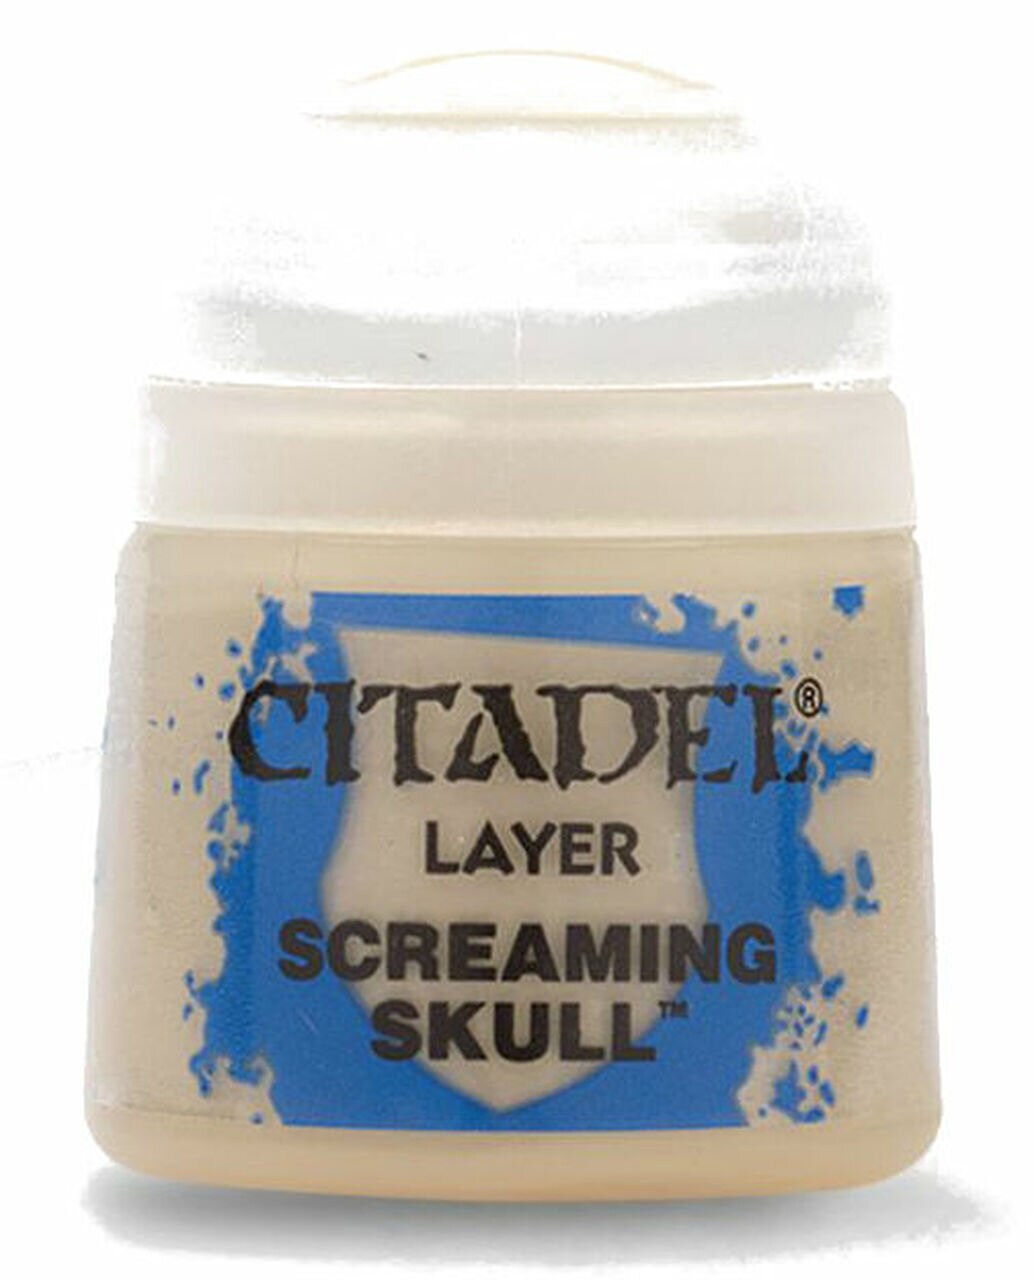 Citadel Paint Layer: Screaming Skull